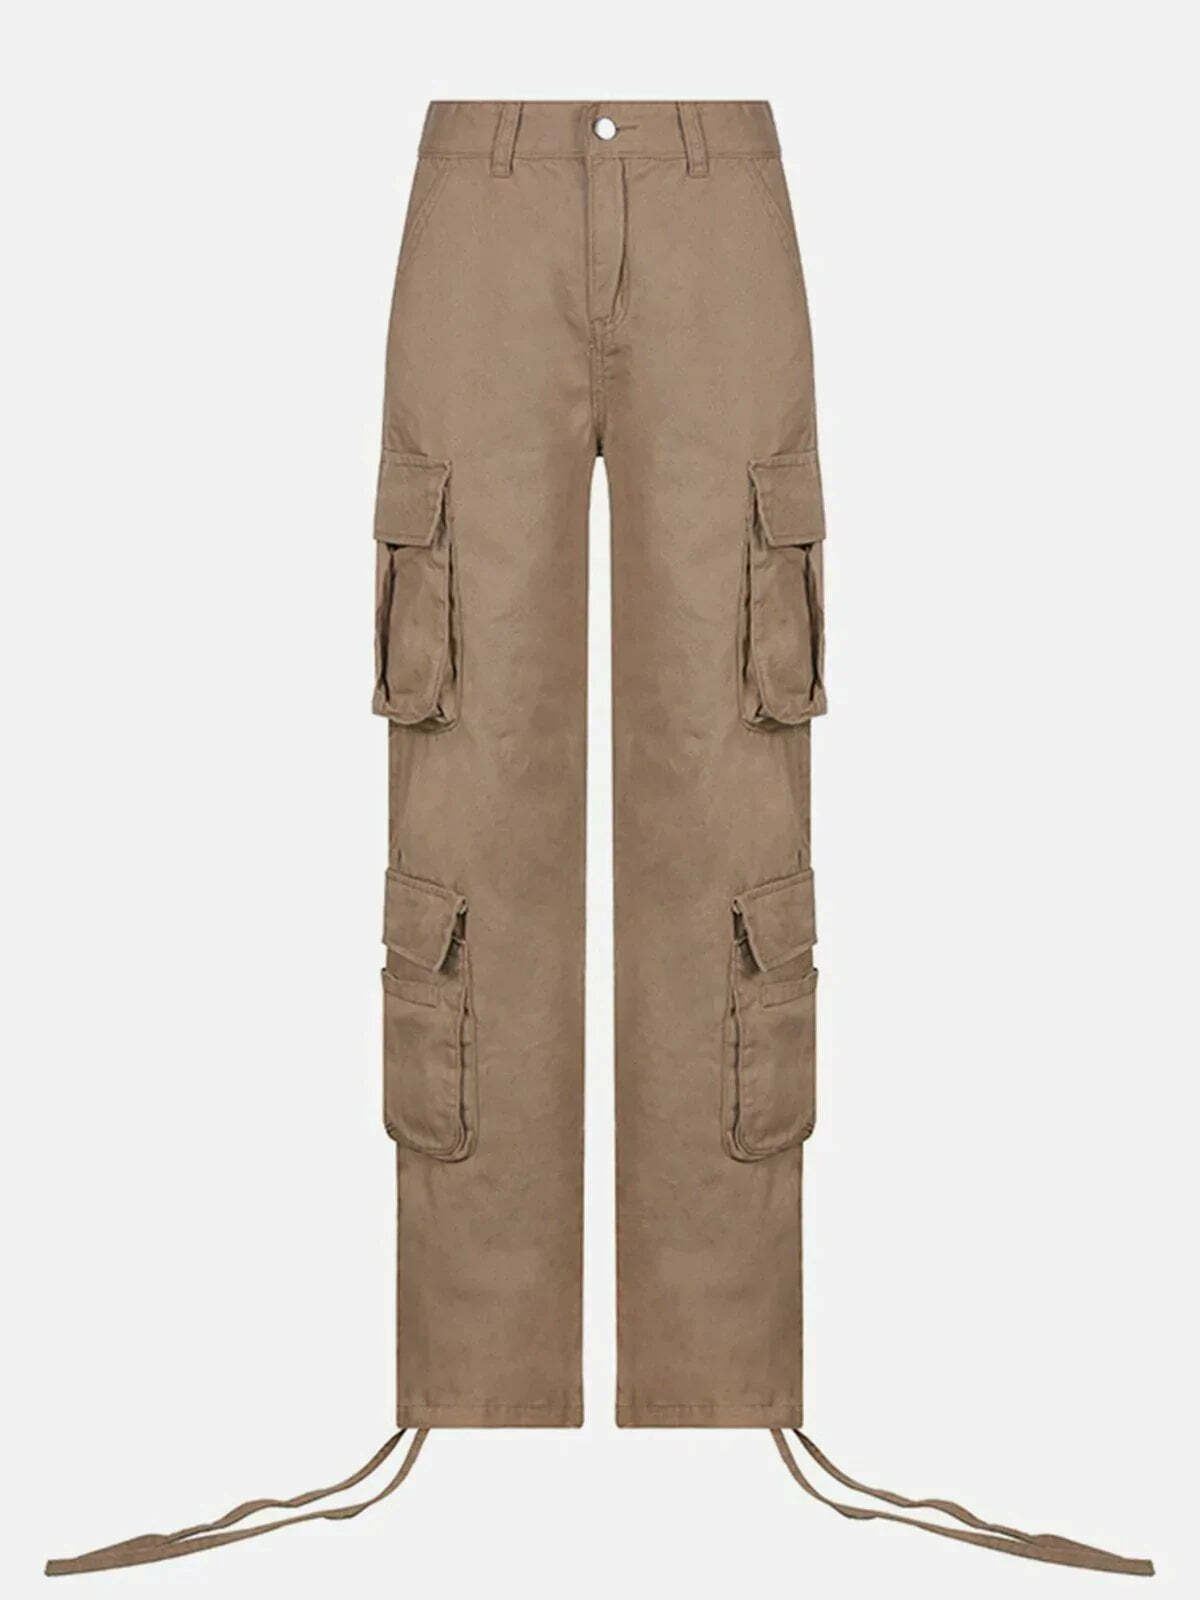 low waist cargo pants edgy & innovative streetwear 4392